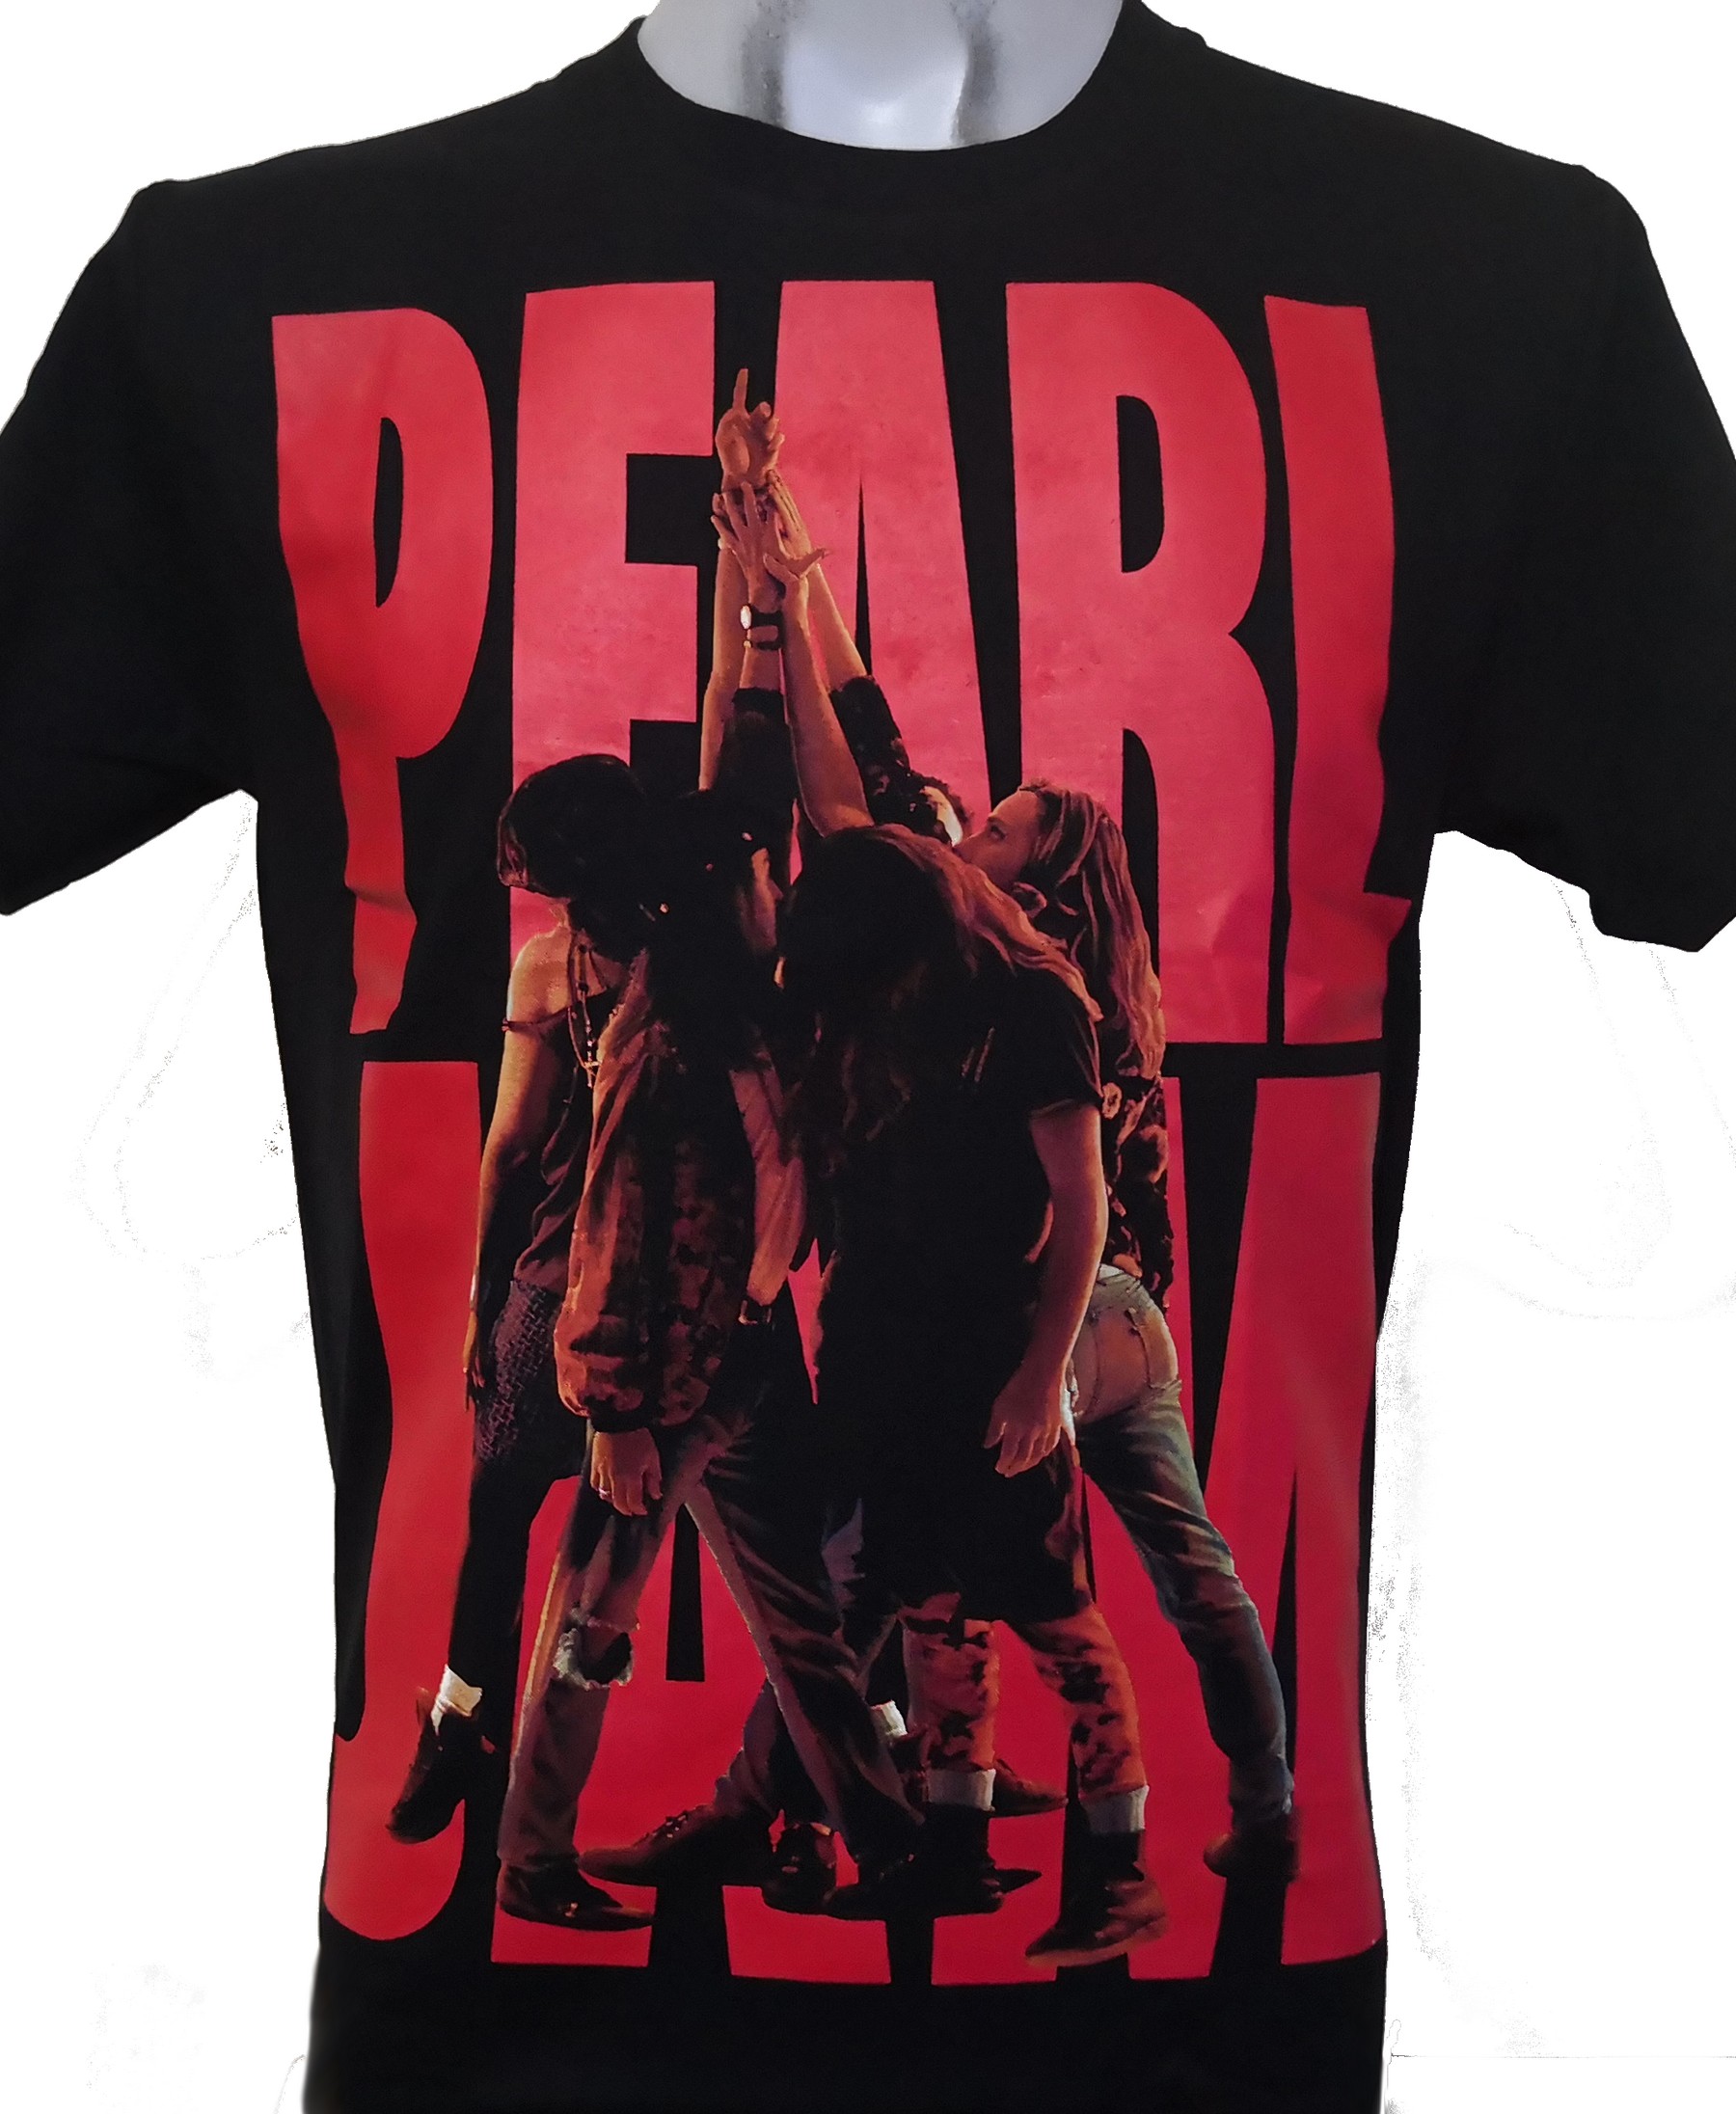 pearl-jam-t-shirt-size-m-roxxbkk